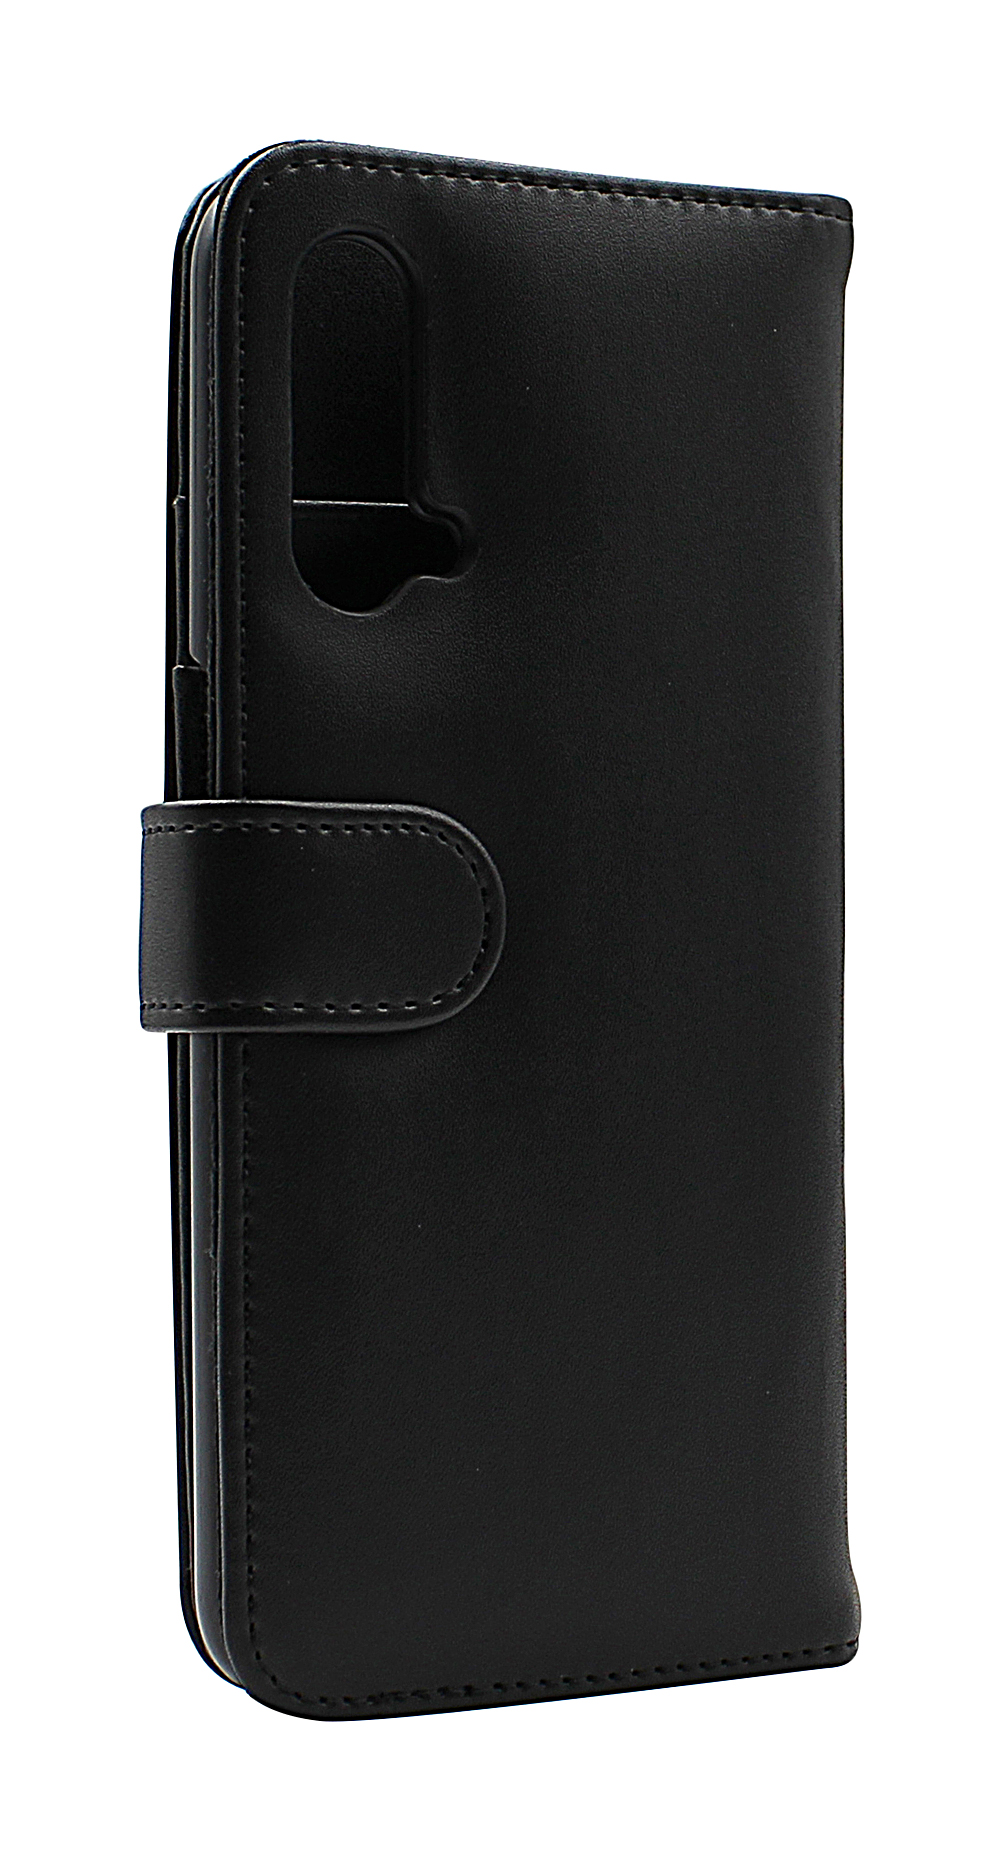 Skimblocker Lommebok-etui OnePlus Nord CE 5G